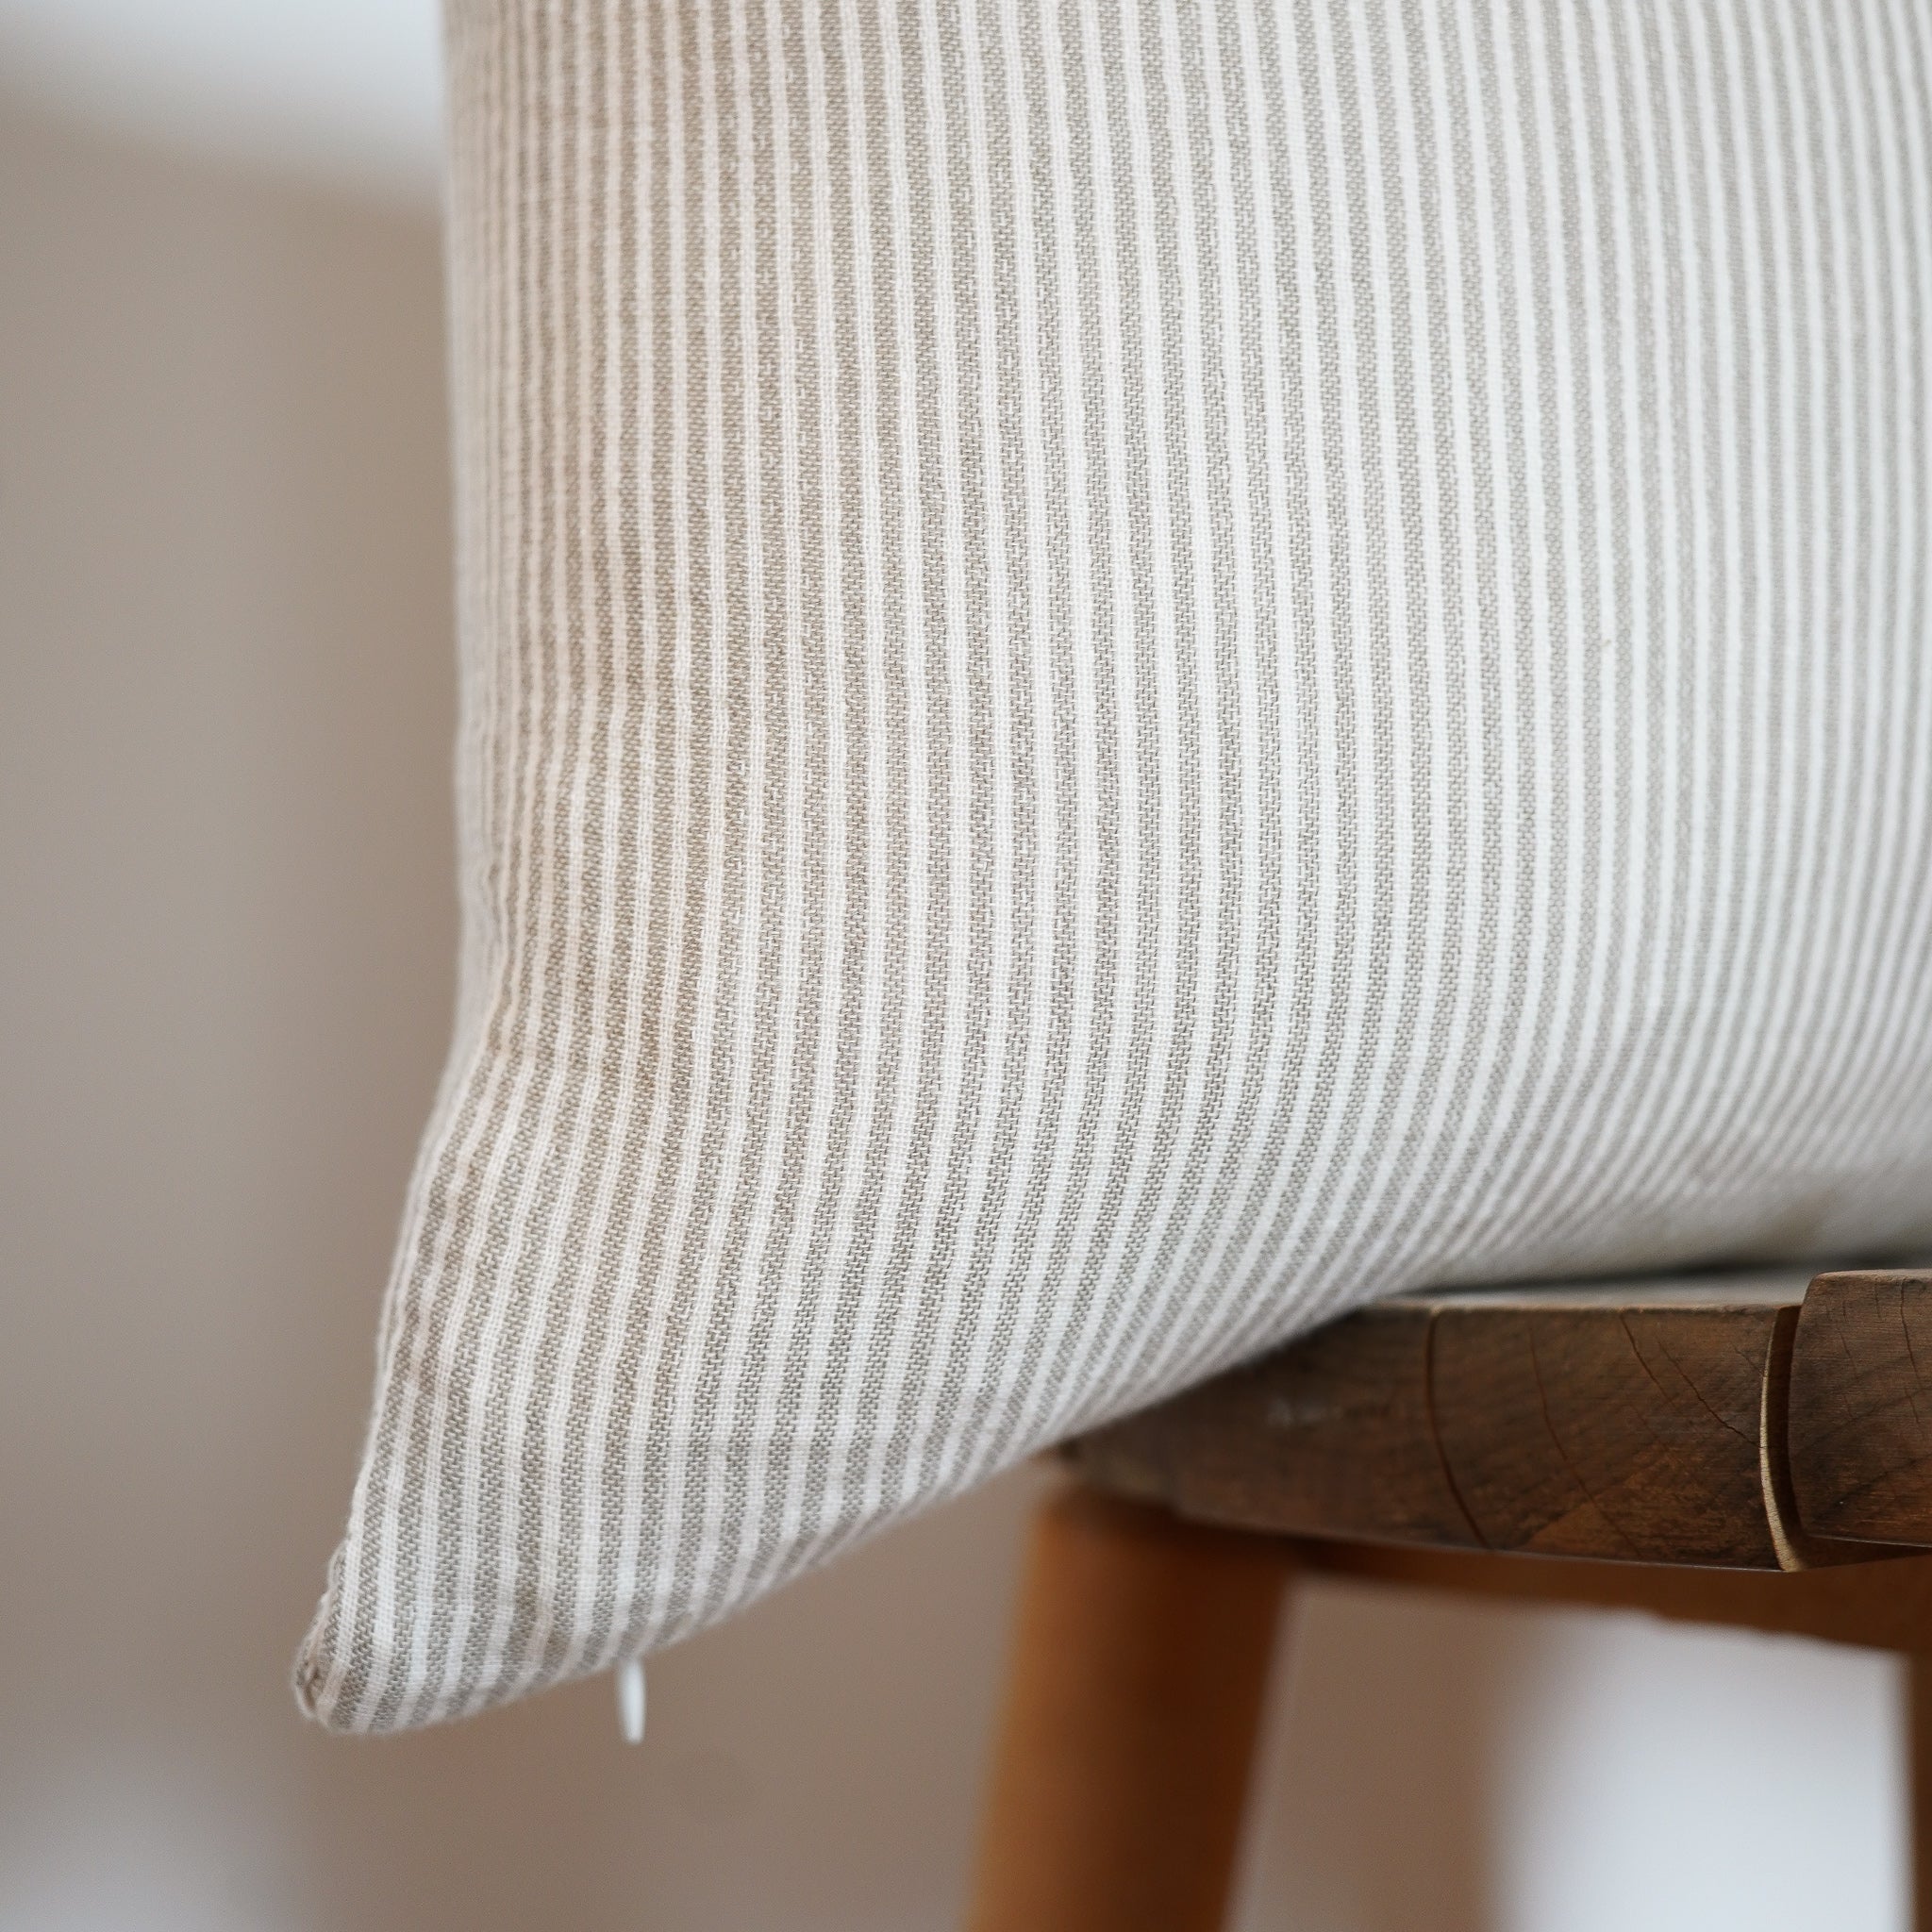 Square Cotton Gauze Pillow - Sage Thin Stripes